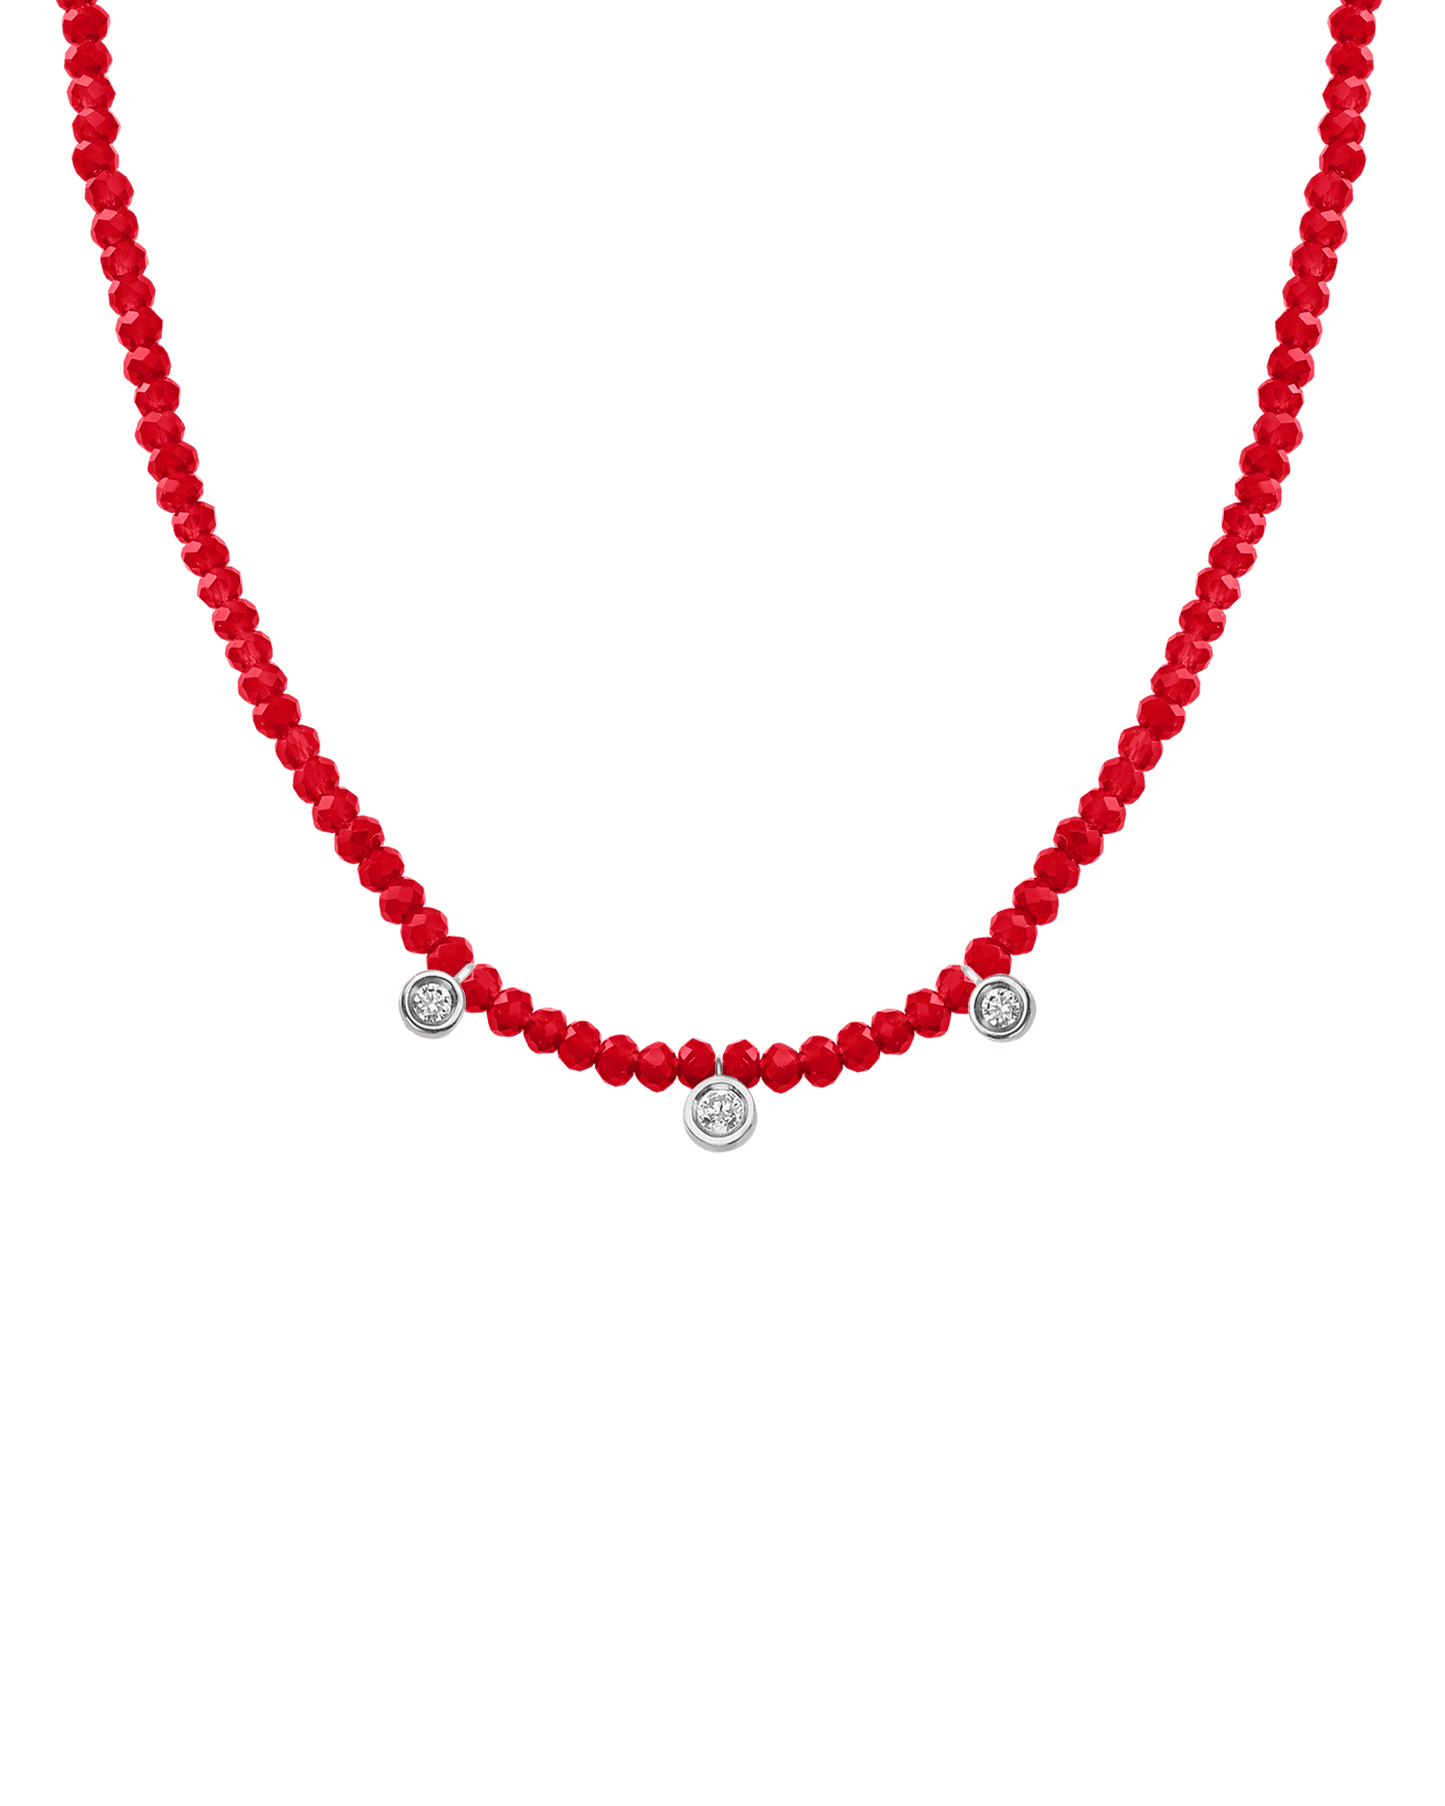 Black Spinel Gemstone & Three diamonds Necklace - 14K Rose Gold